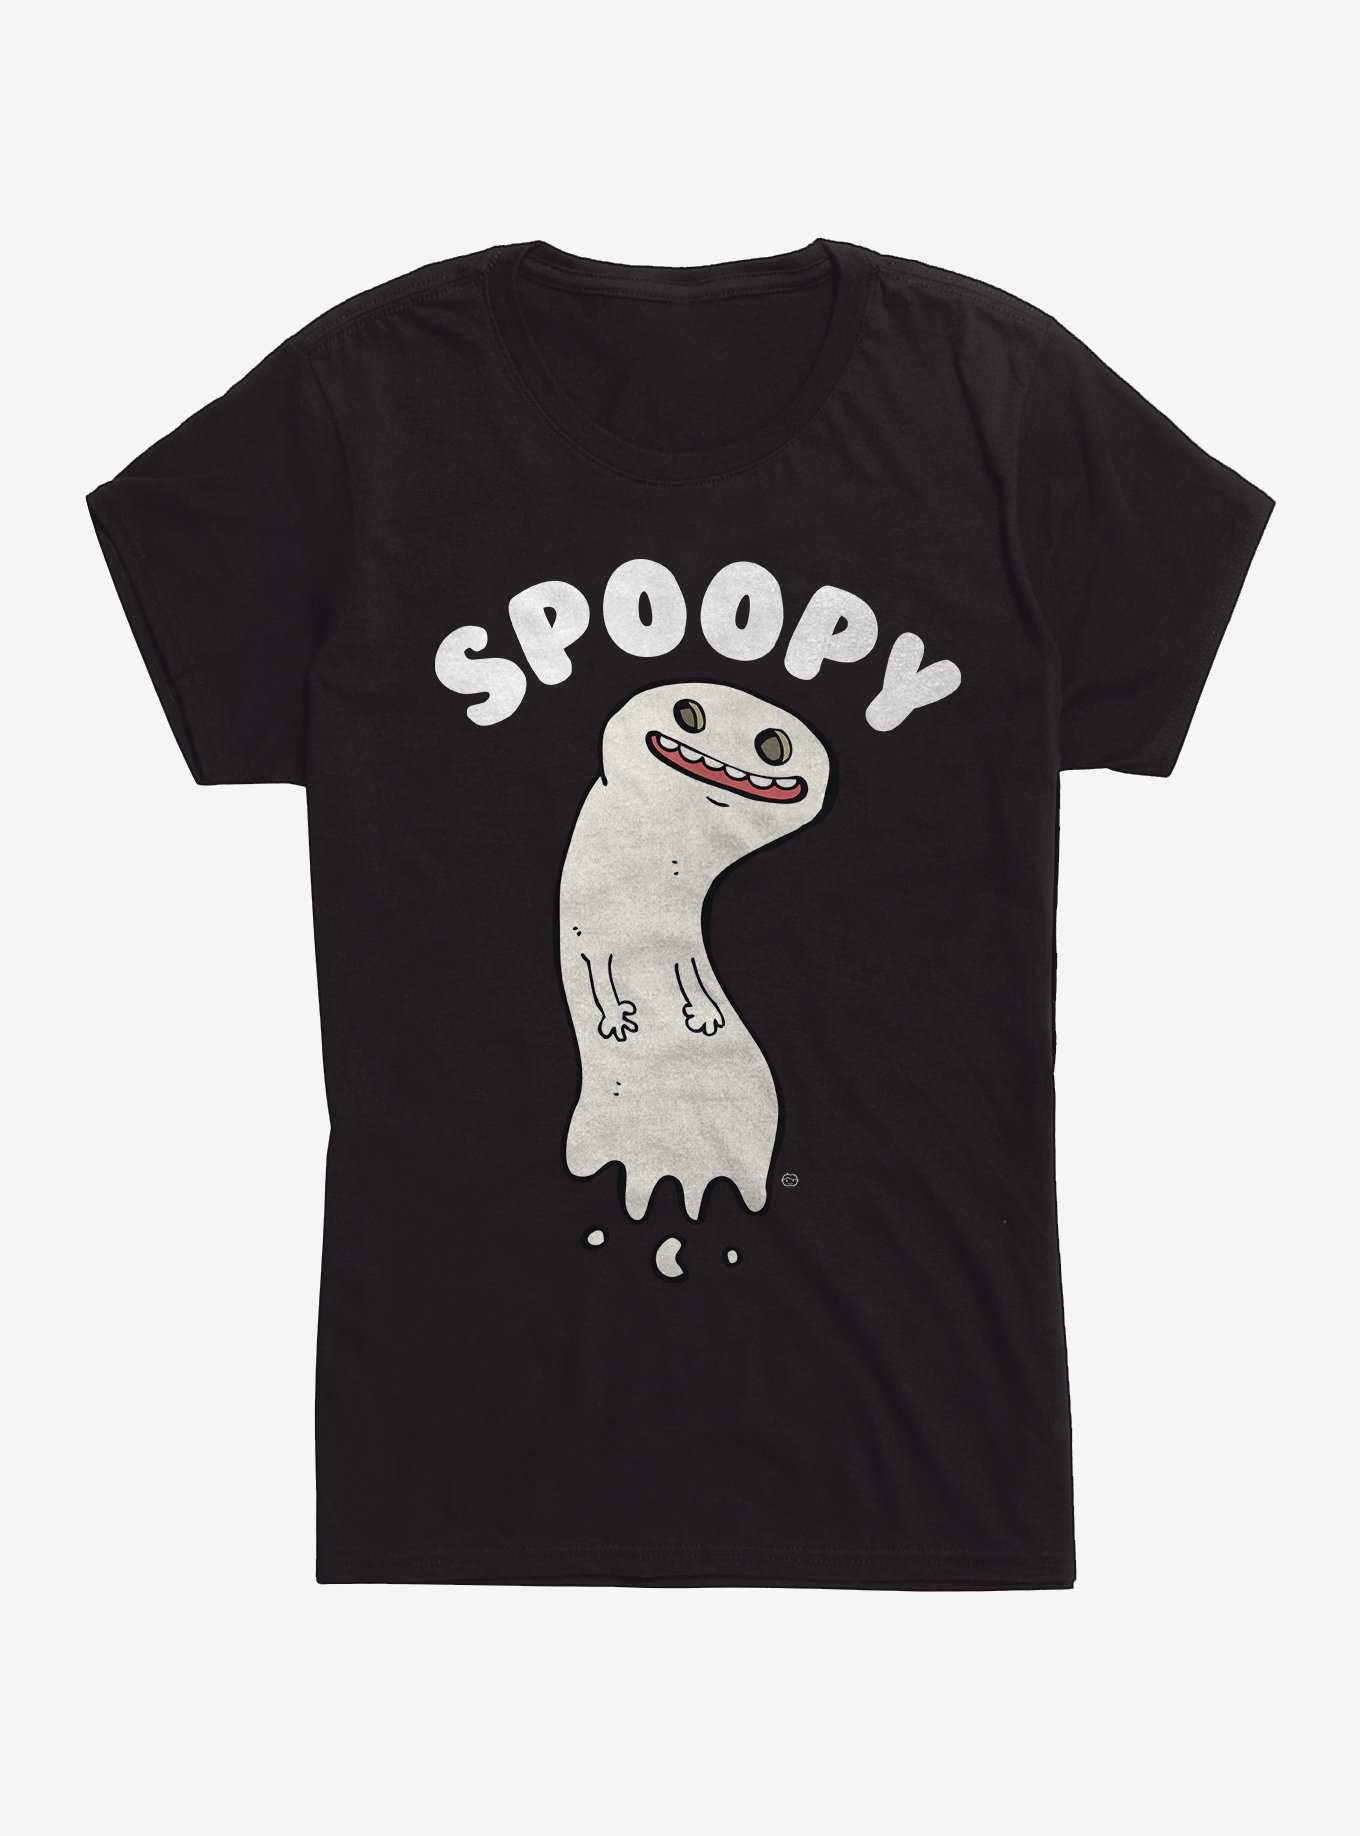 Spoopy Monster Girls T-Shirt, , hi-res